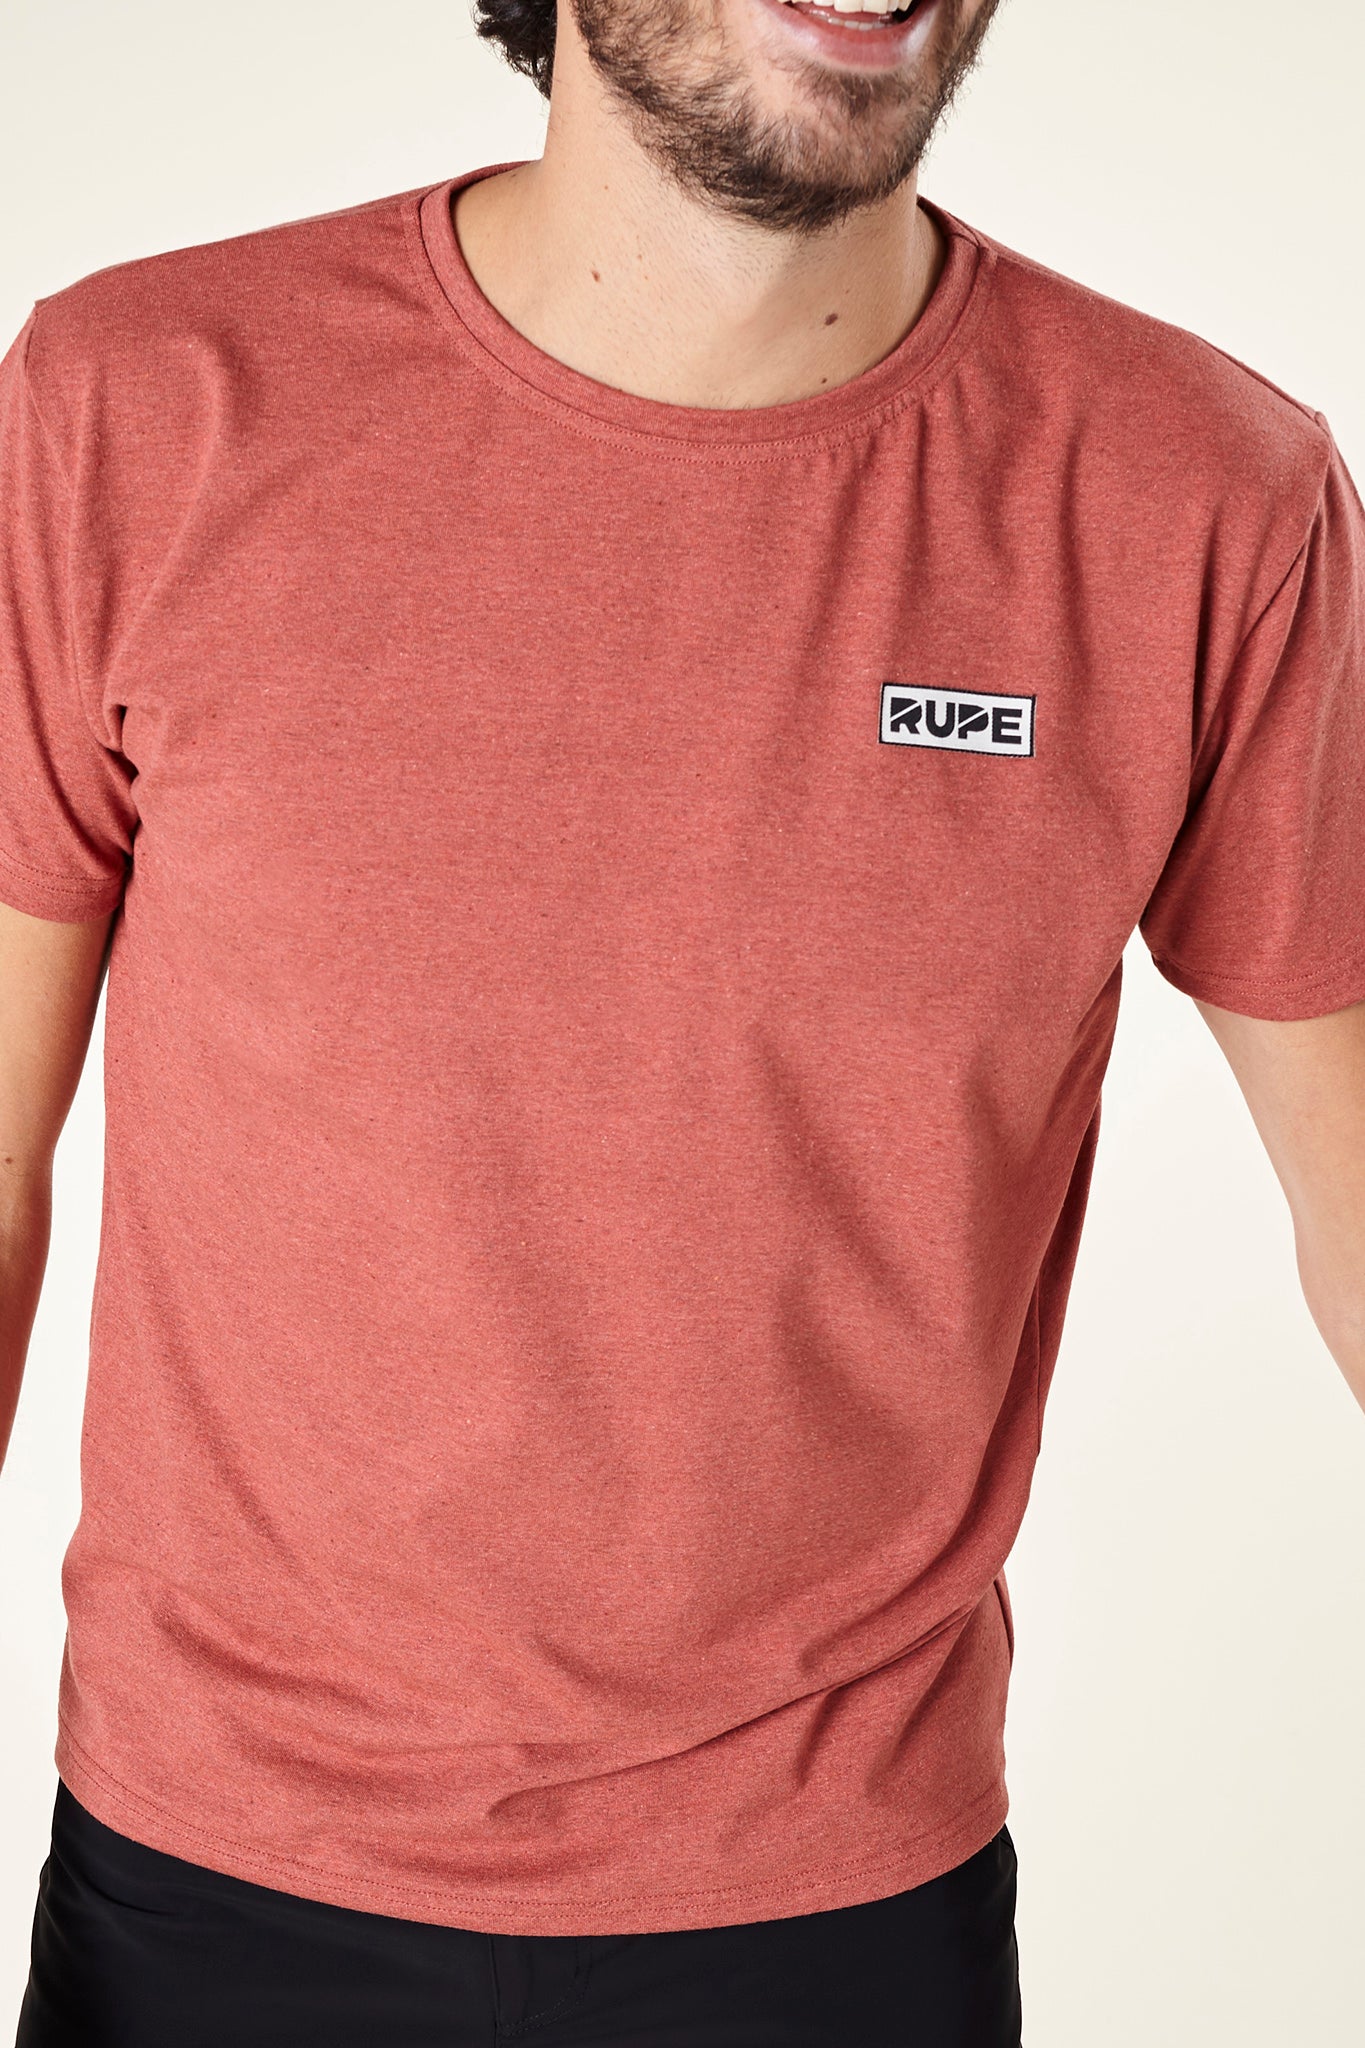 Men's Pumice T-shirt - Copper